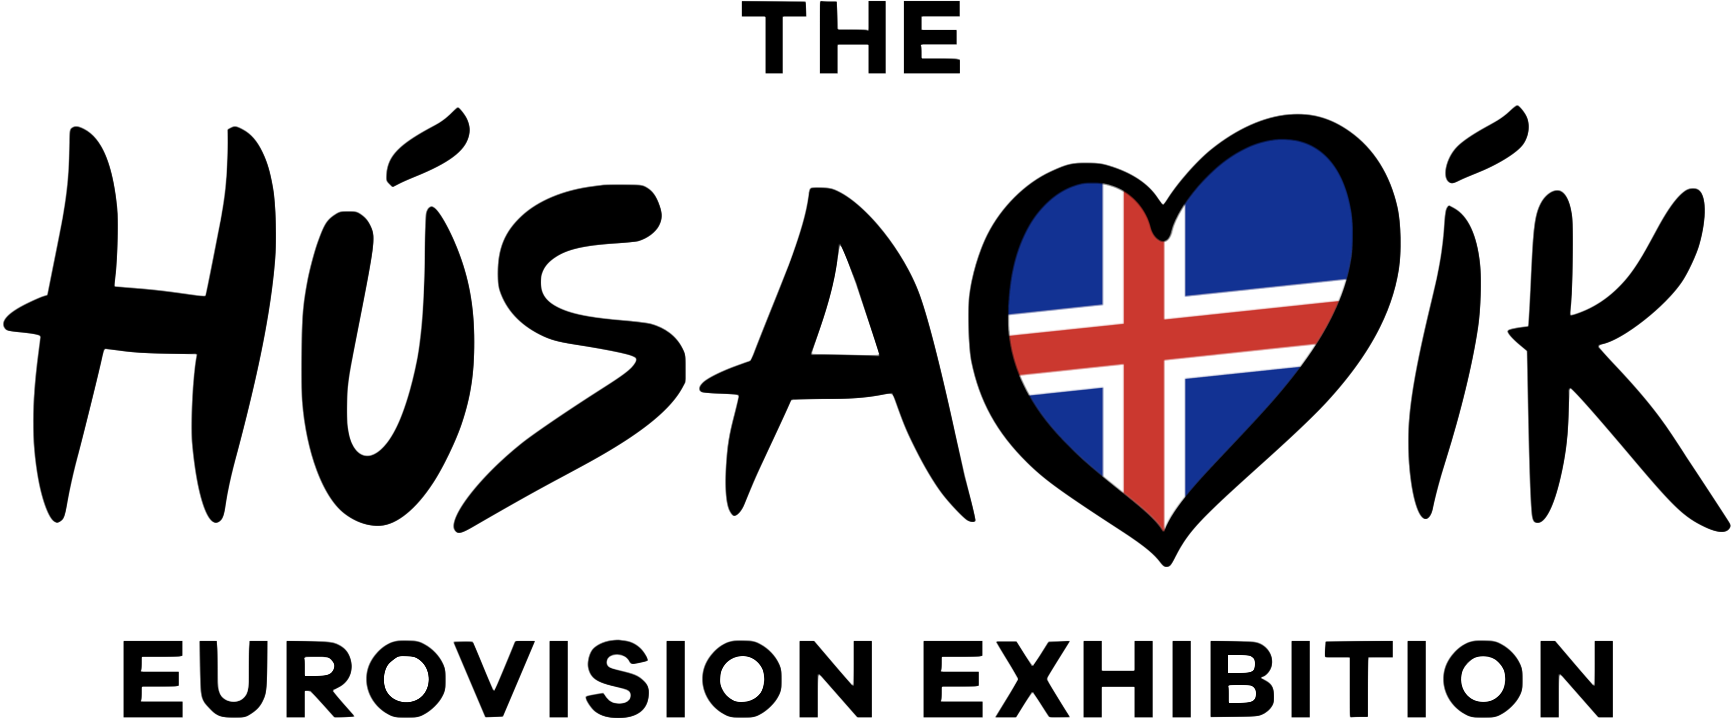 The Húsavík Eurovision Exhibition